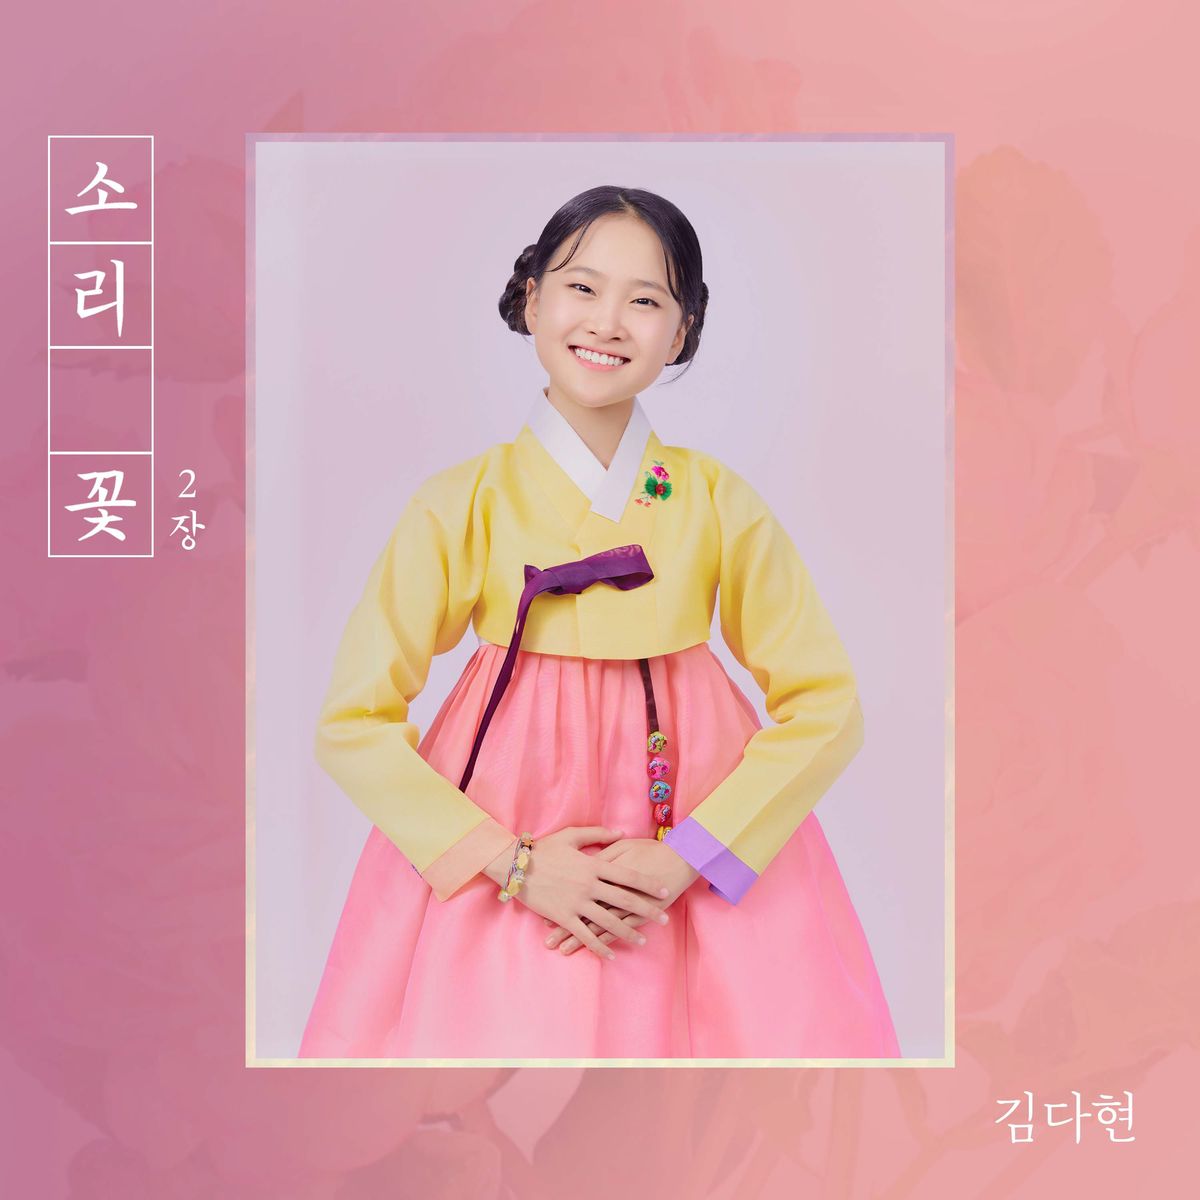 Kim Da Hyun – Chapter 2 of Sound Flower – Single